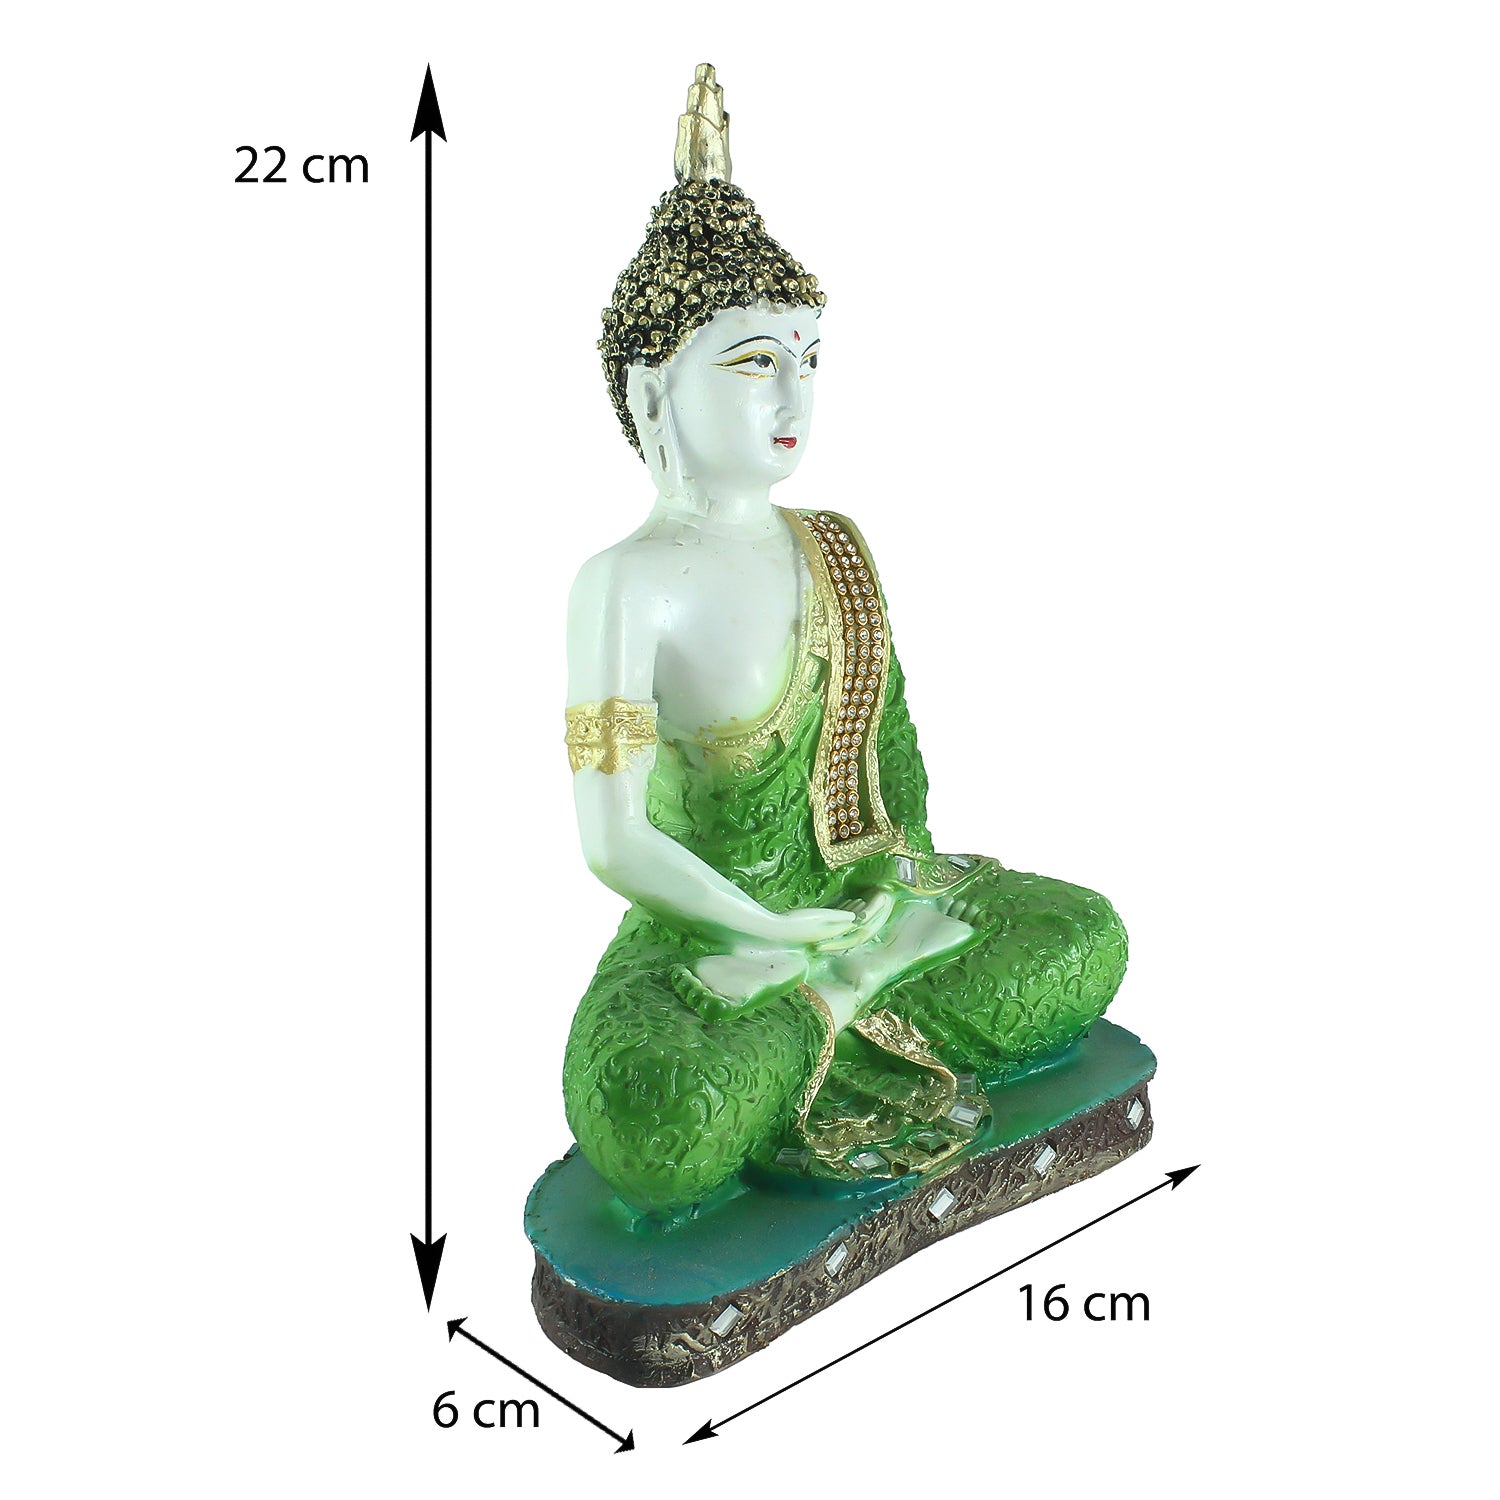 Polyresin Green and White Decorative Meditating Buddha Statue 2